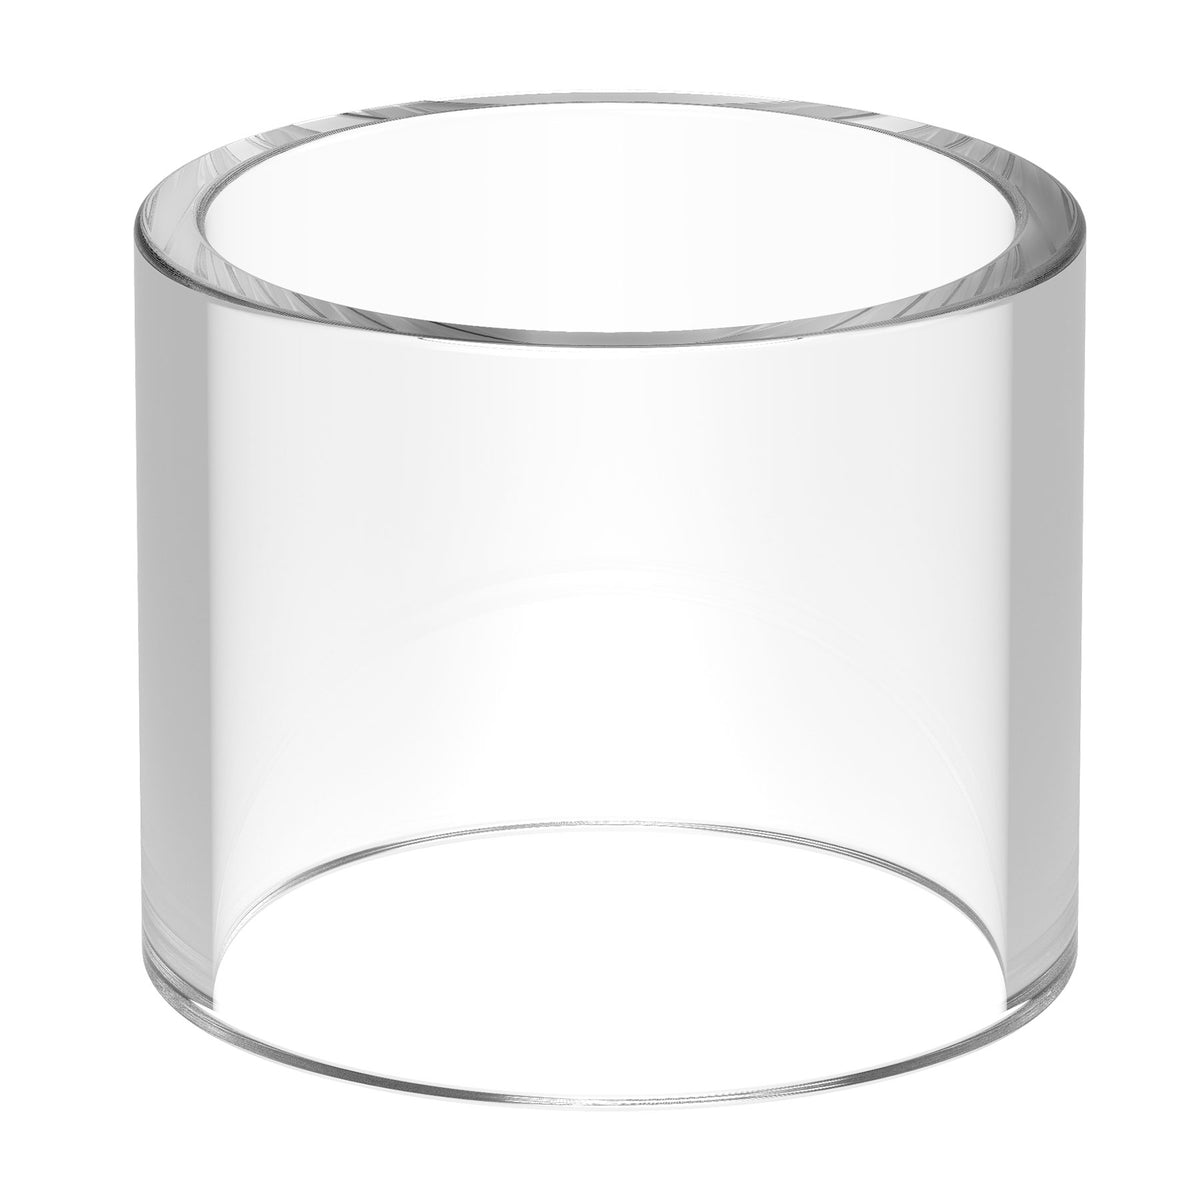 Onixx Glass | Aspire Replacement | Buy Aspire Tank Glass Online